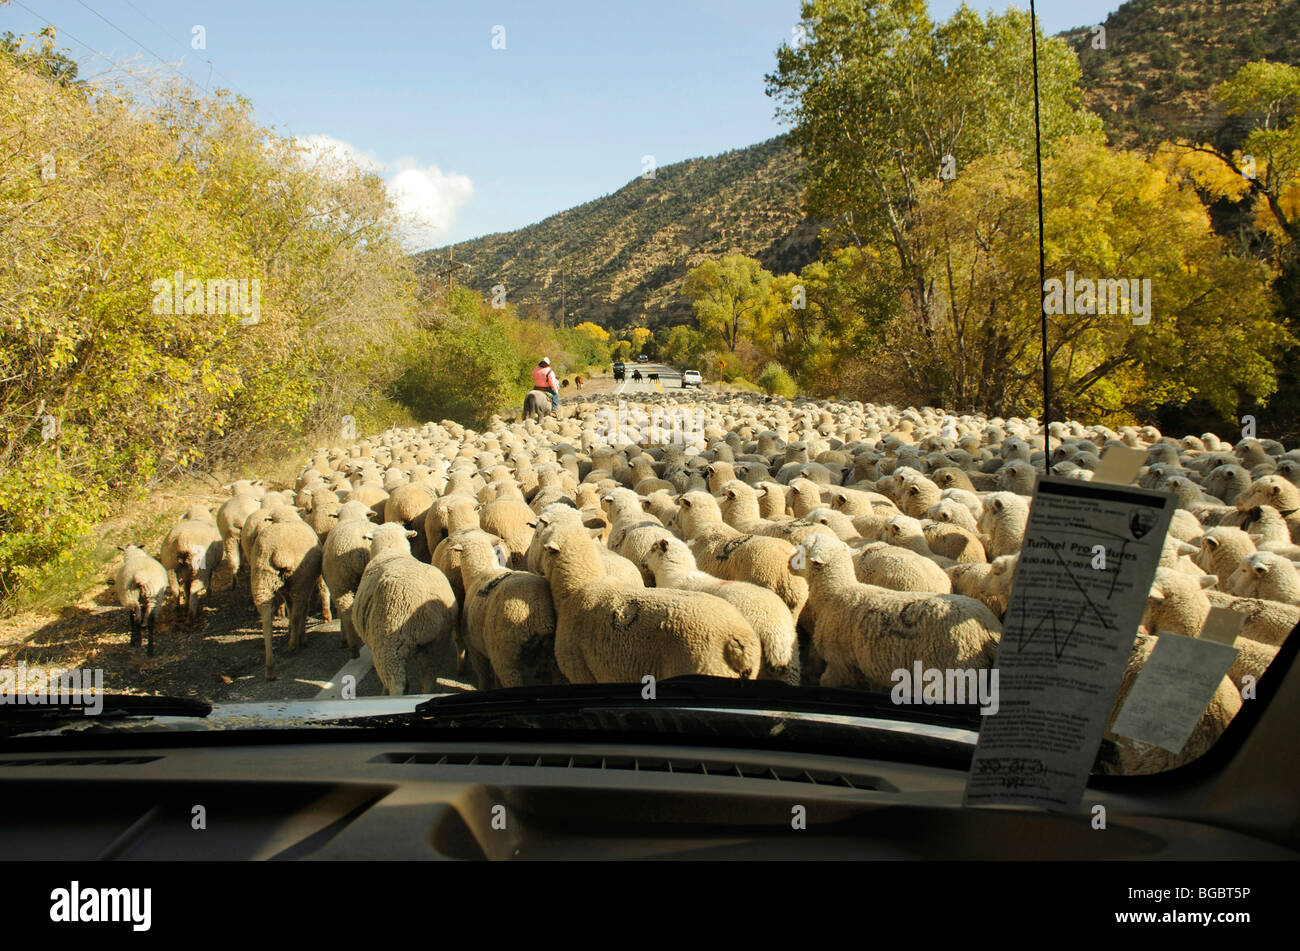 Flock of sheep blocking the road, Panguitch, Utah, USA Stock Photo